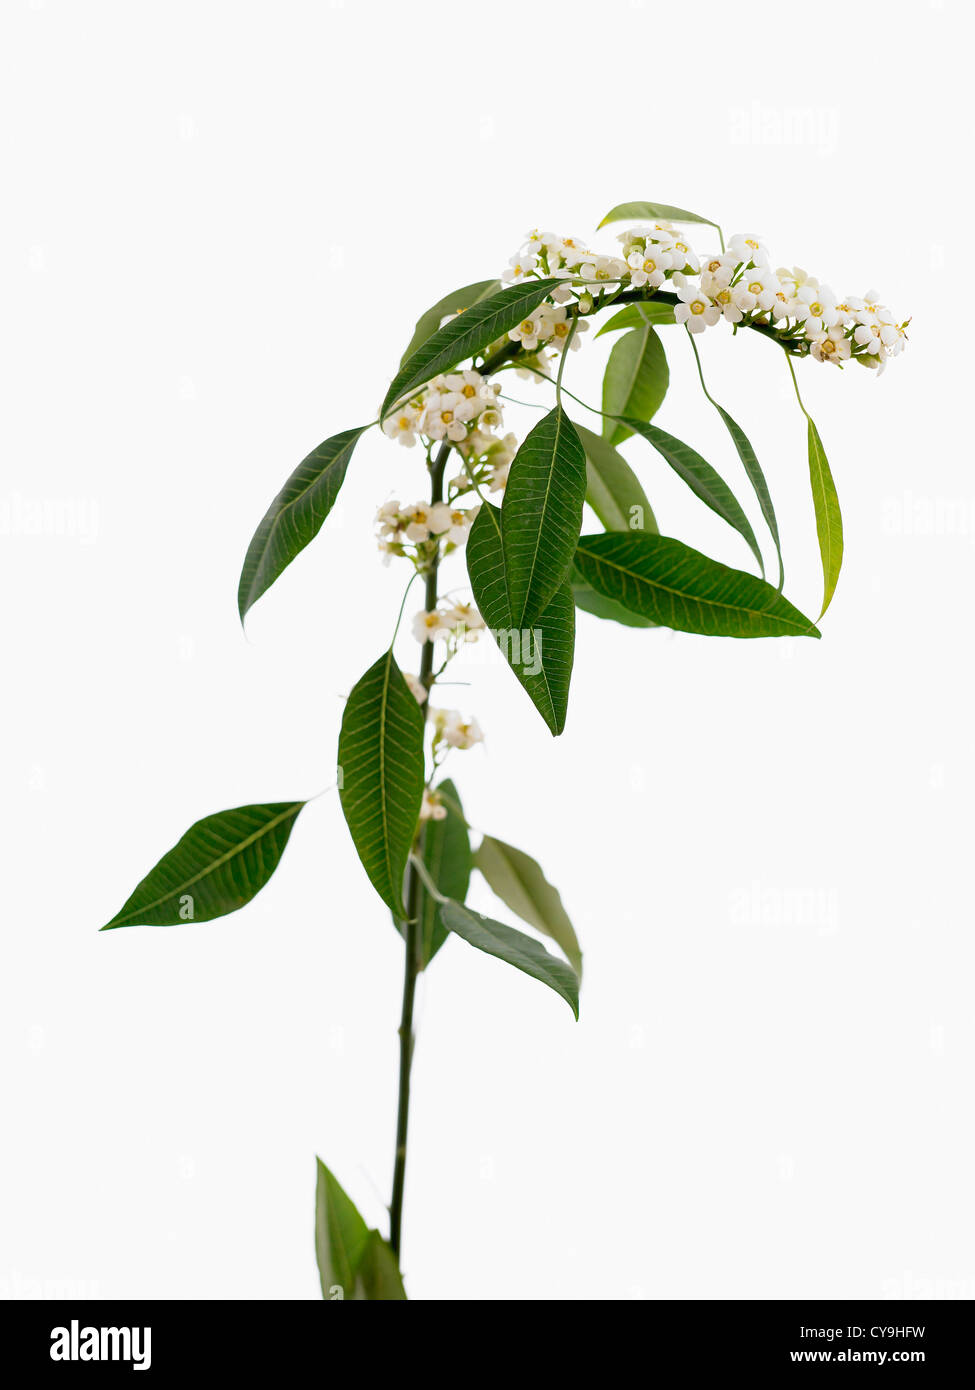 Euphorbia fulgens 'White King', Spurge. Small white flowers on single leafy stem against a white background Stock Photo